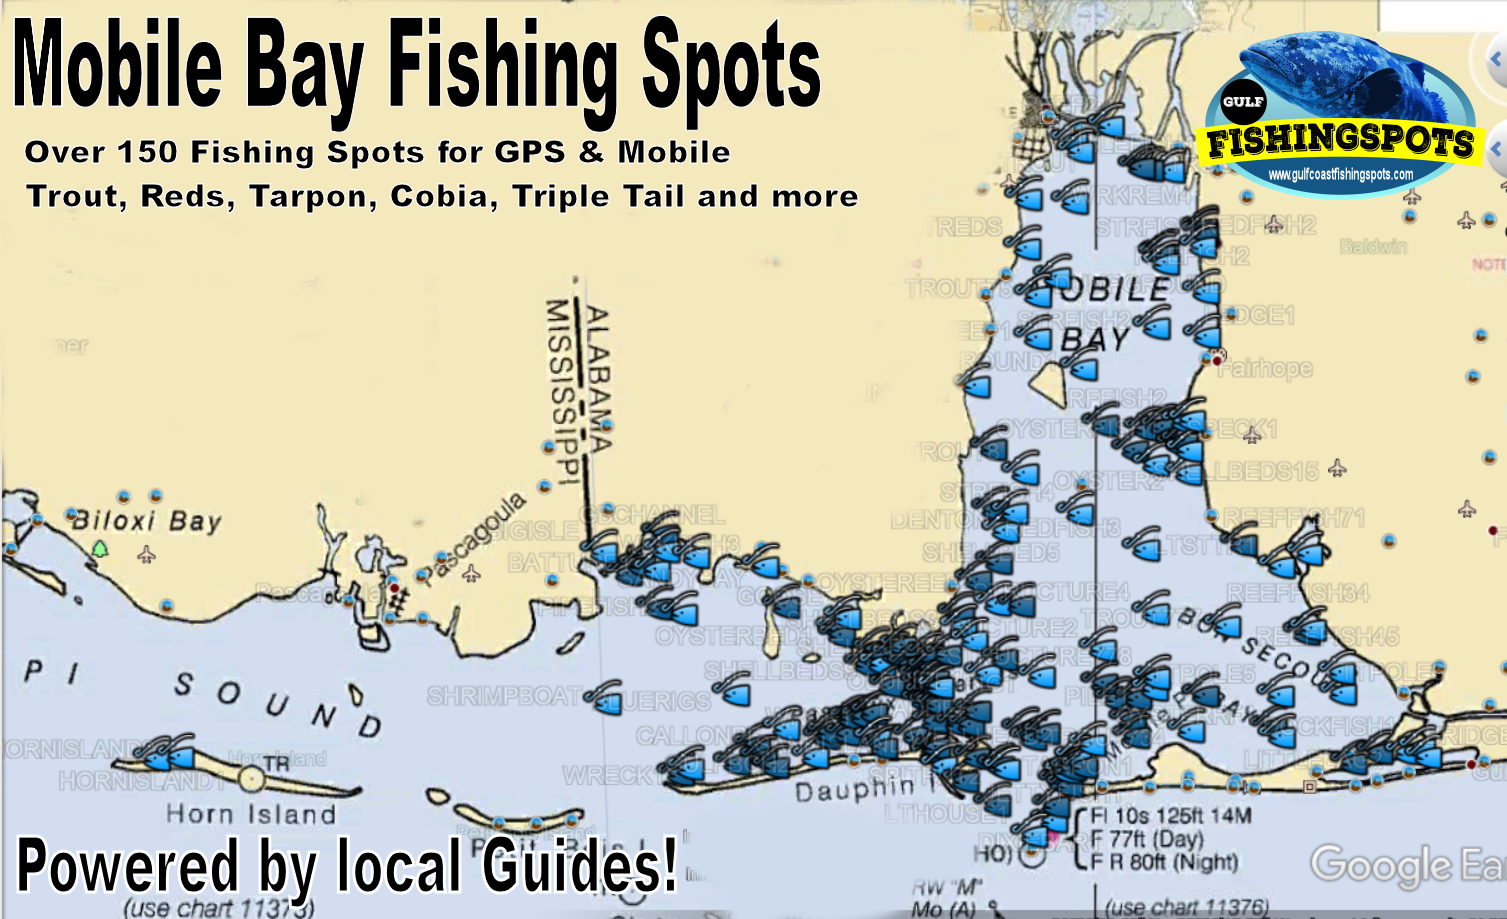 Mobile Bay GPS Fishing Spots - Gulf Fishing Spots for GPS